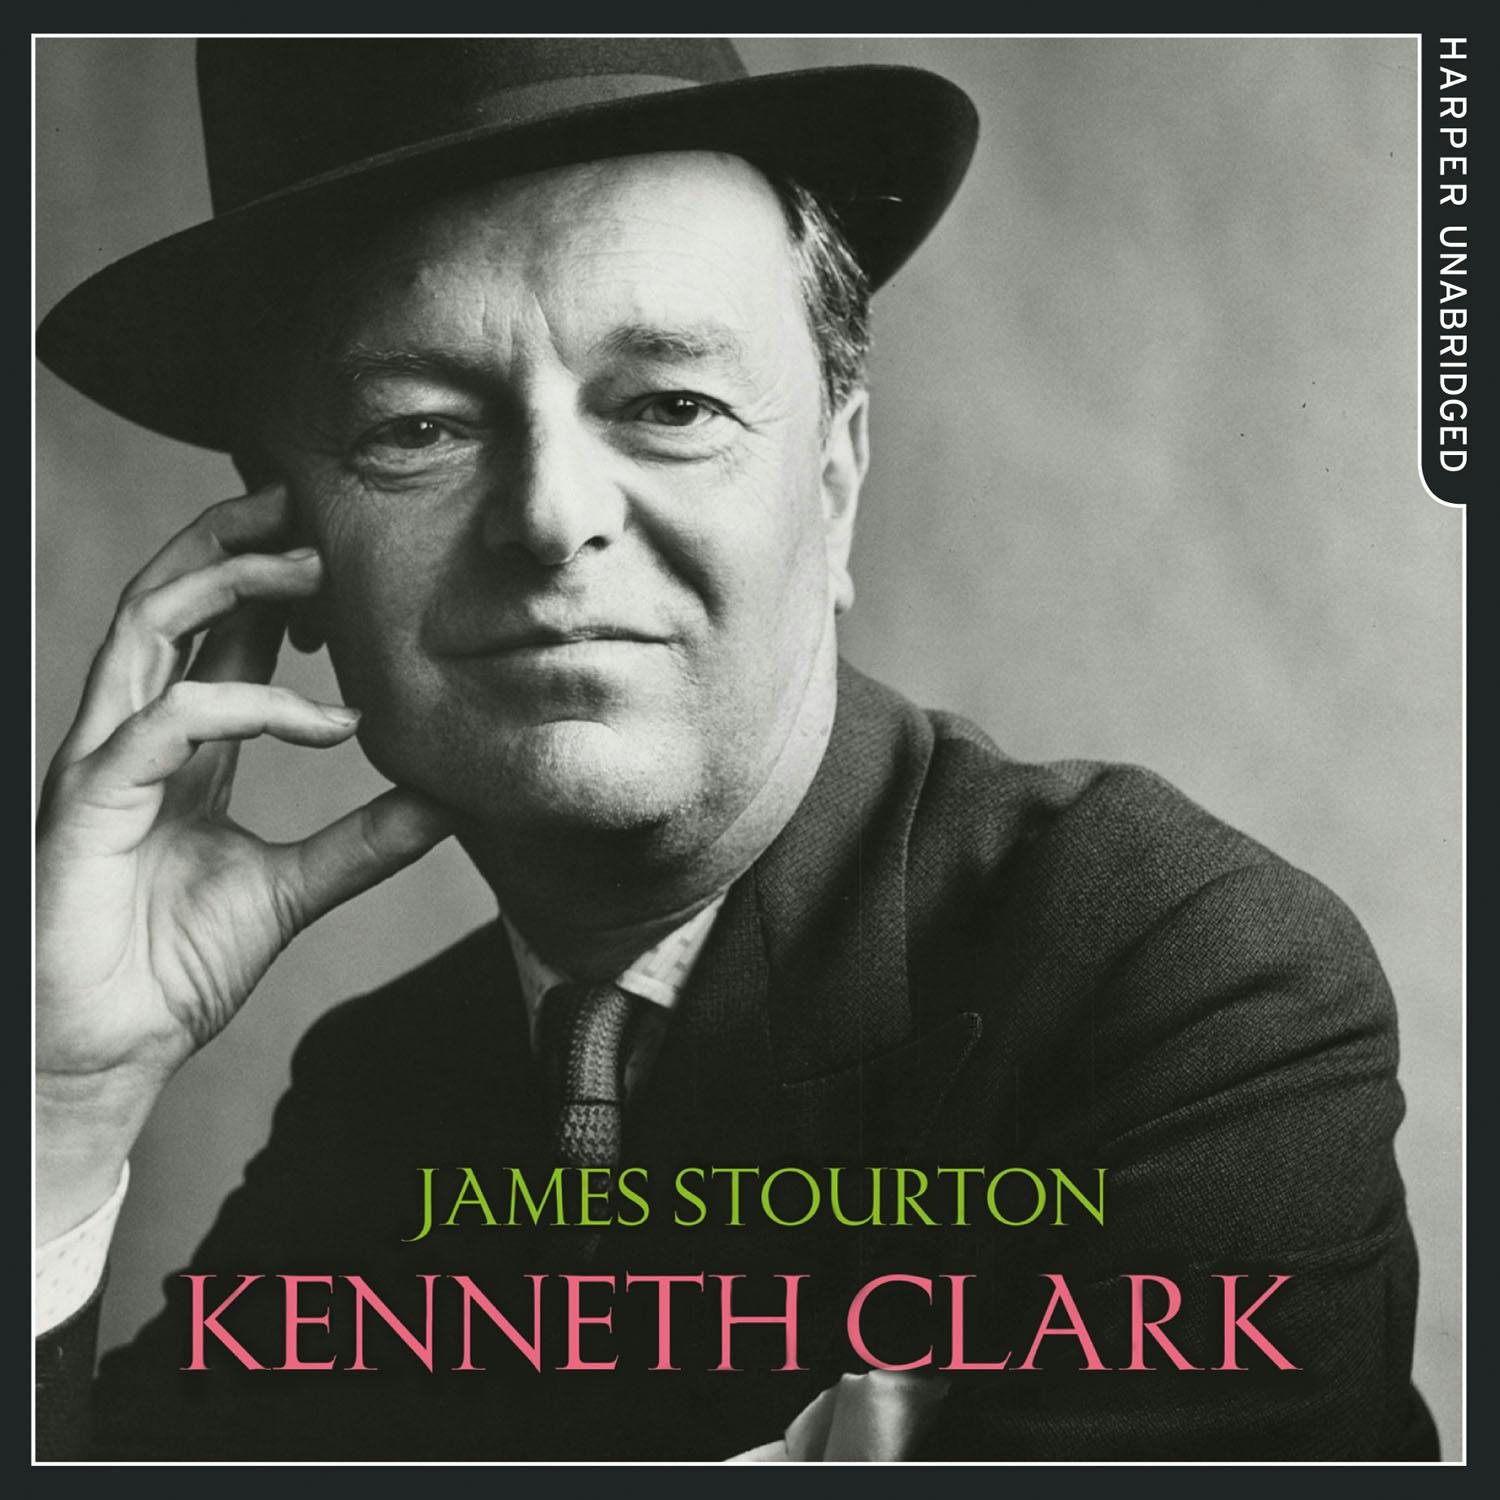 Kenneth Clark: Life, Art and Civilisation - James Stourton